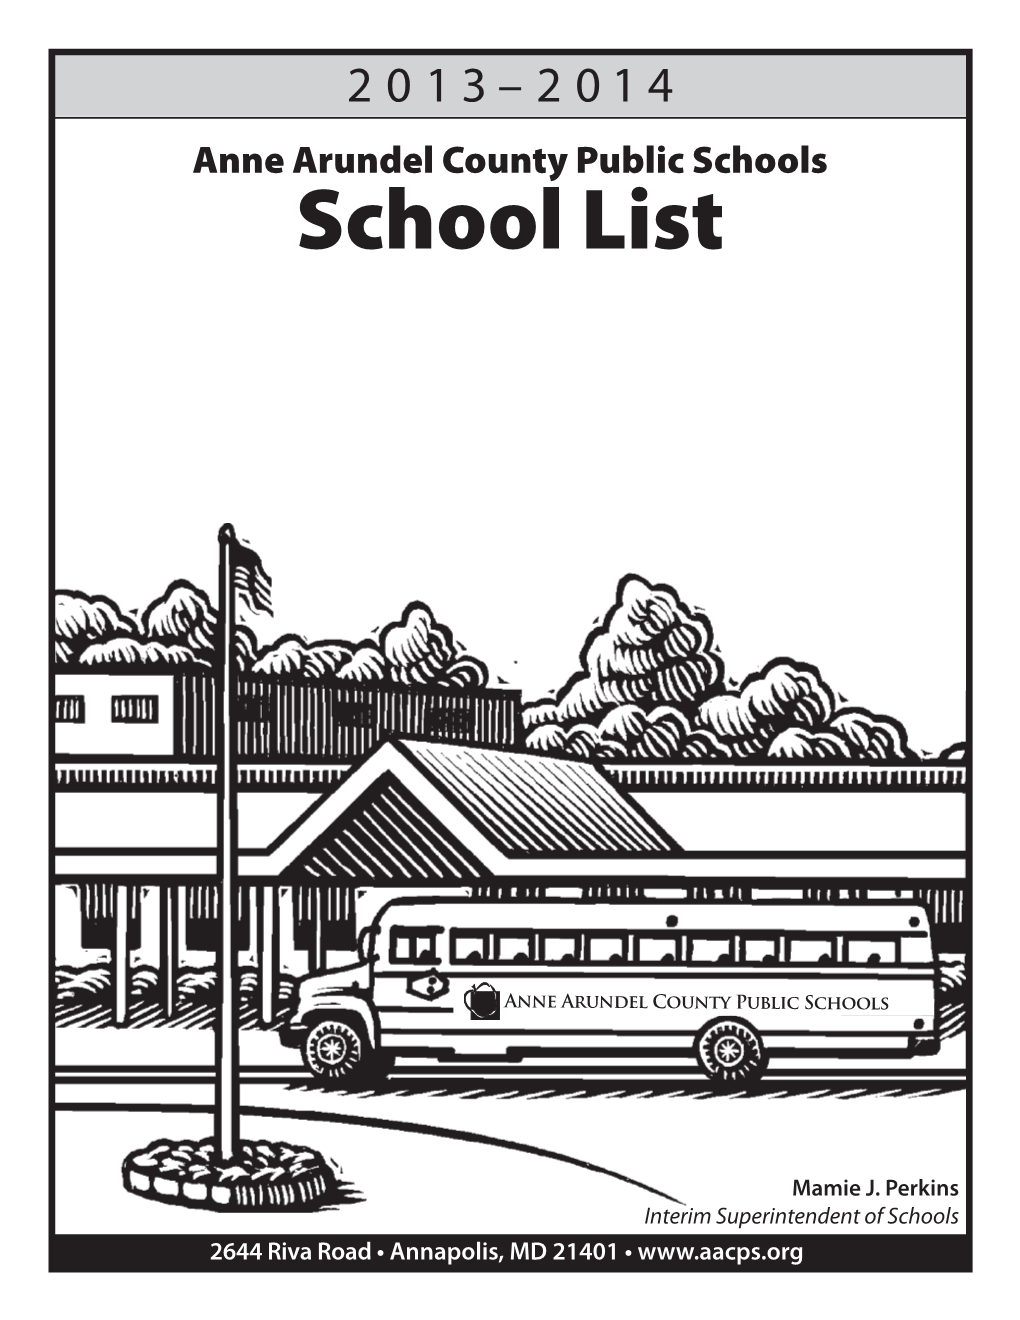 Anne Arundel County Public Schools School List